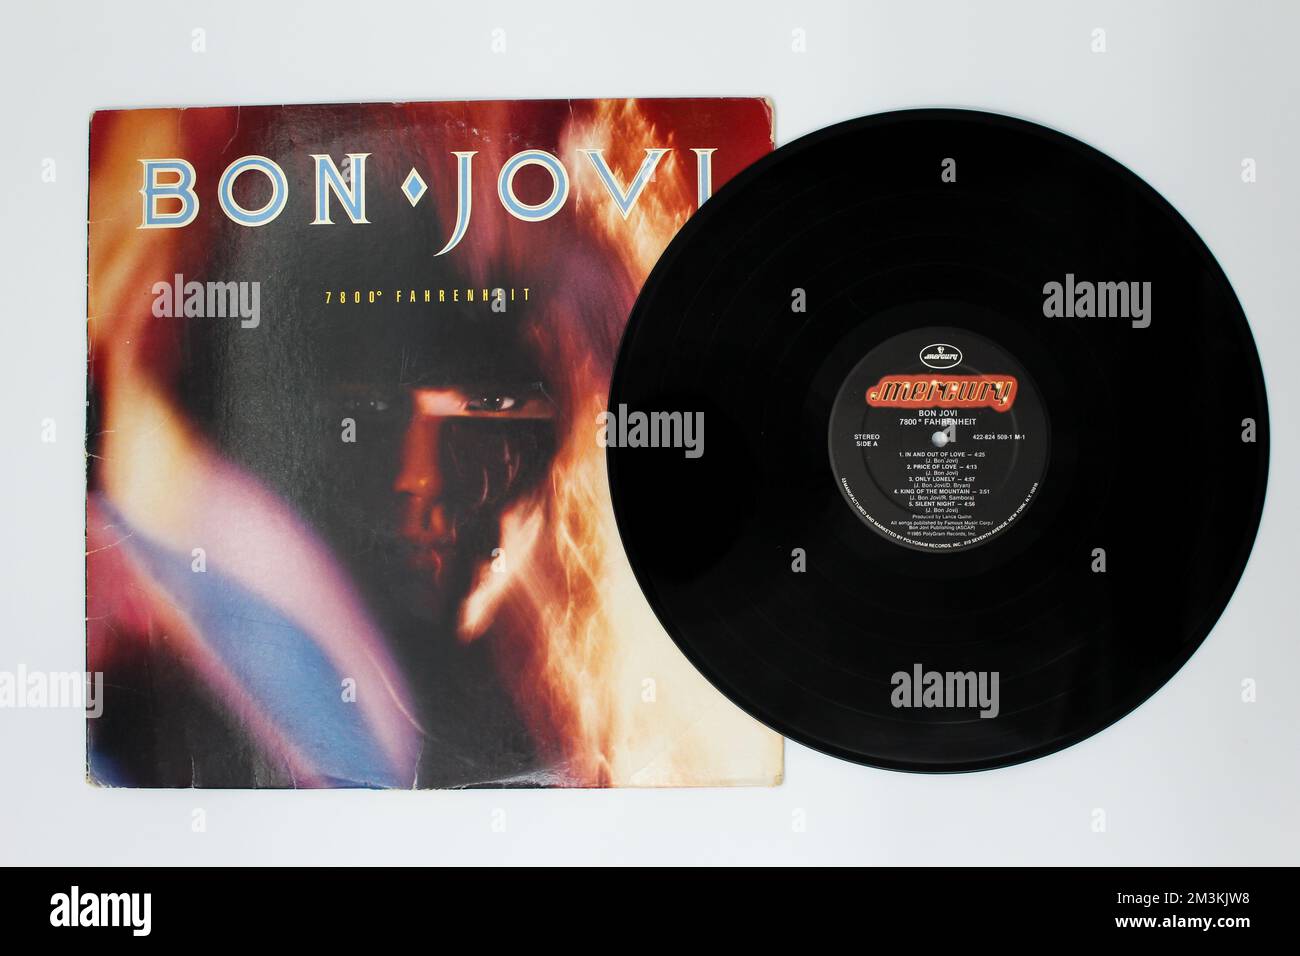 Glam metal and hard rock artist, Bon Jovi music album on vinyl record LP disc. Titled: 7800 Fahrenheit LP Stock Photo